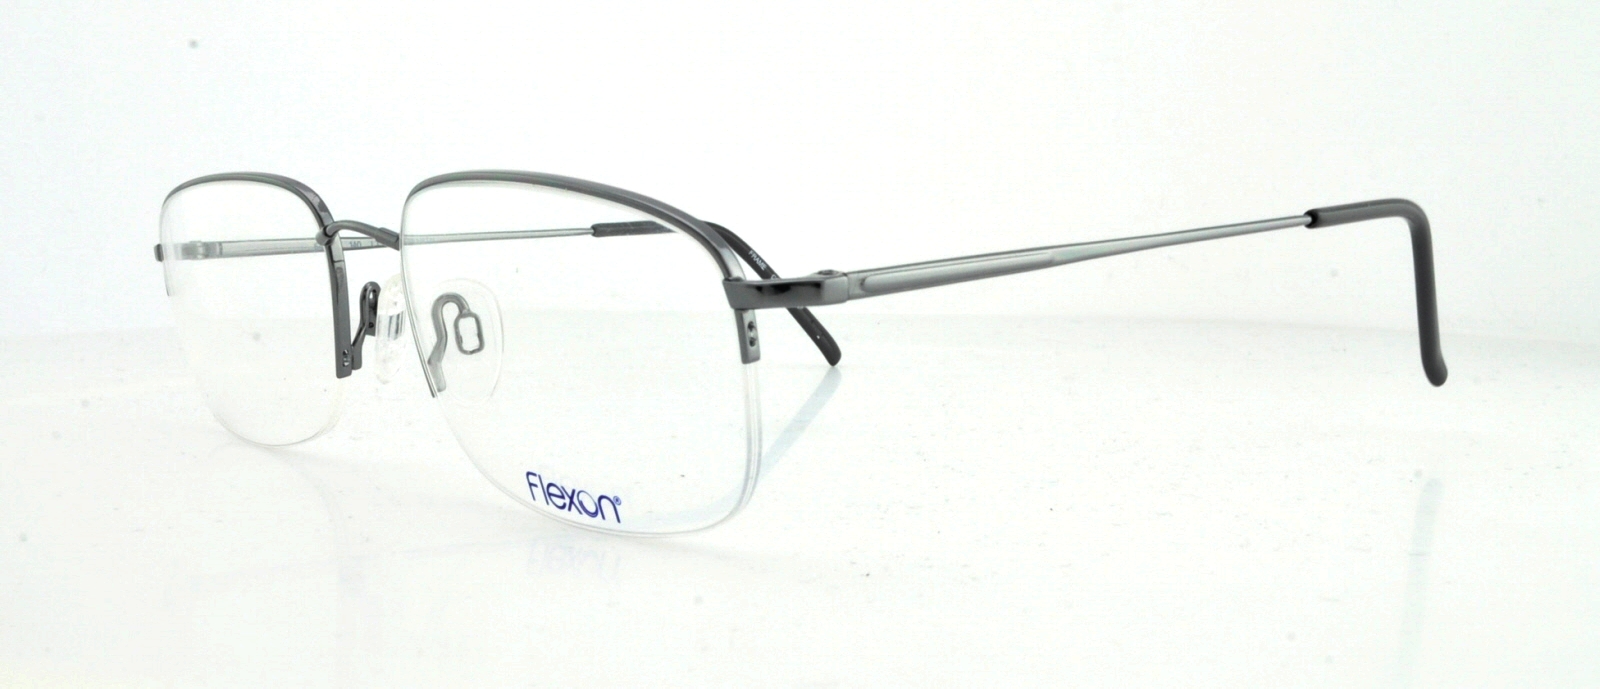 Picture of Flexon Eyeglasses 606